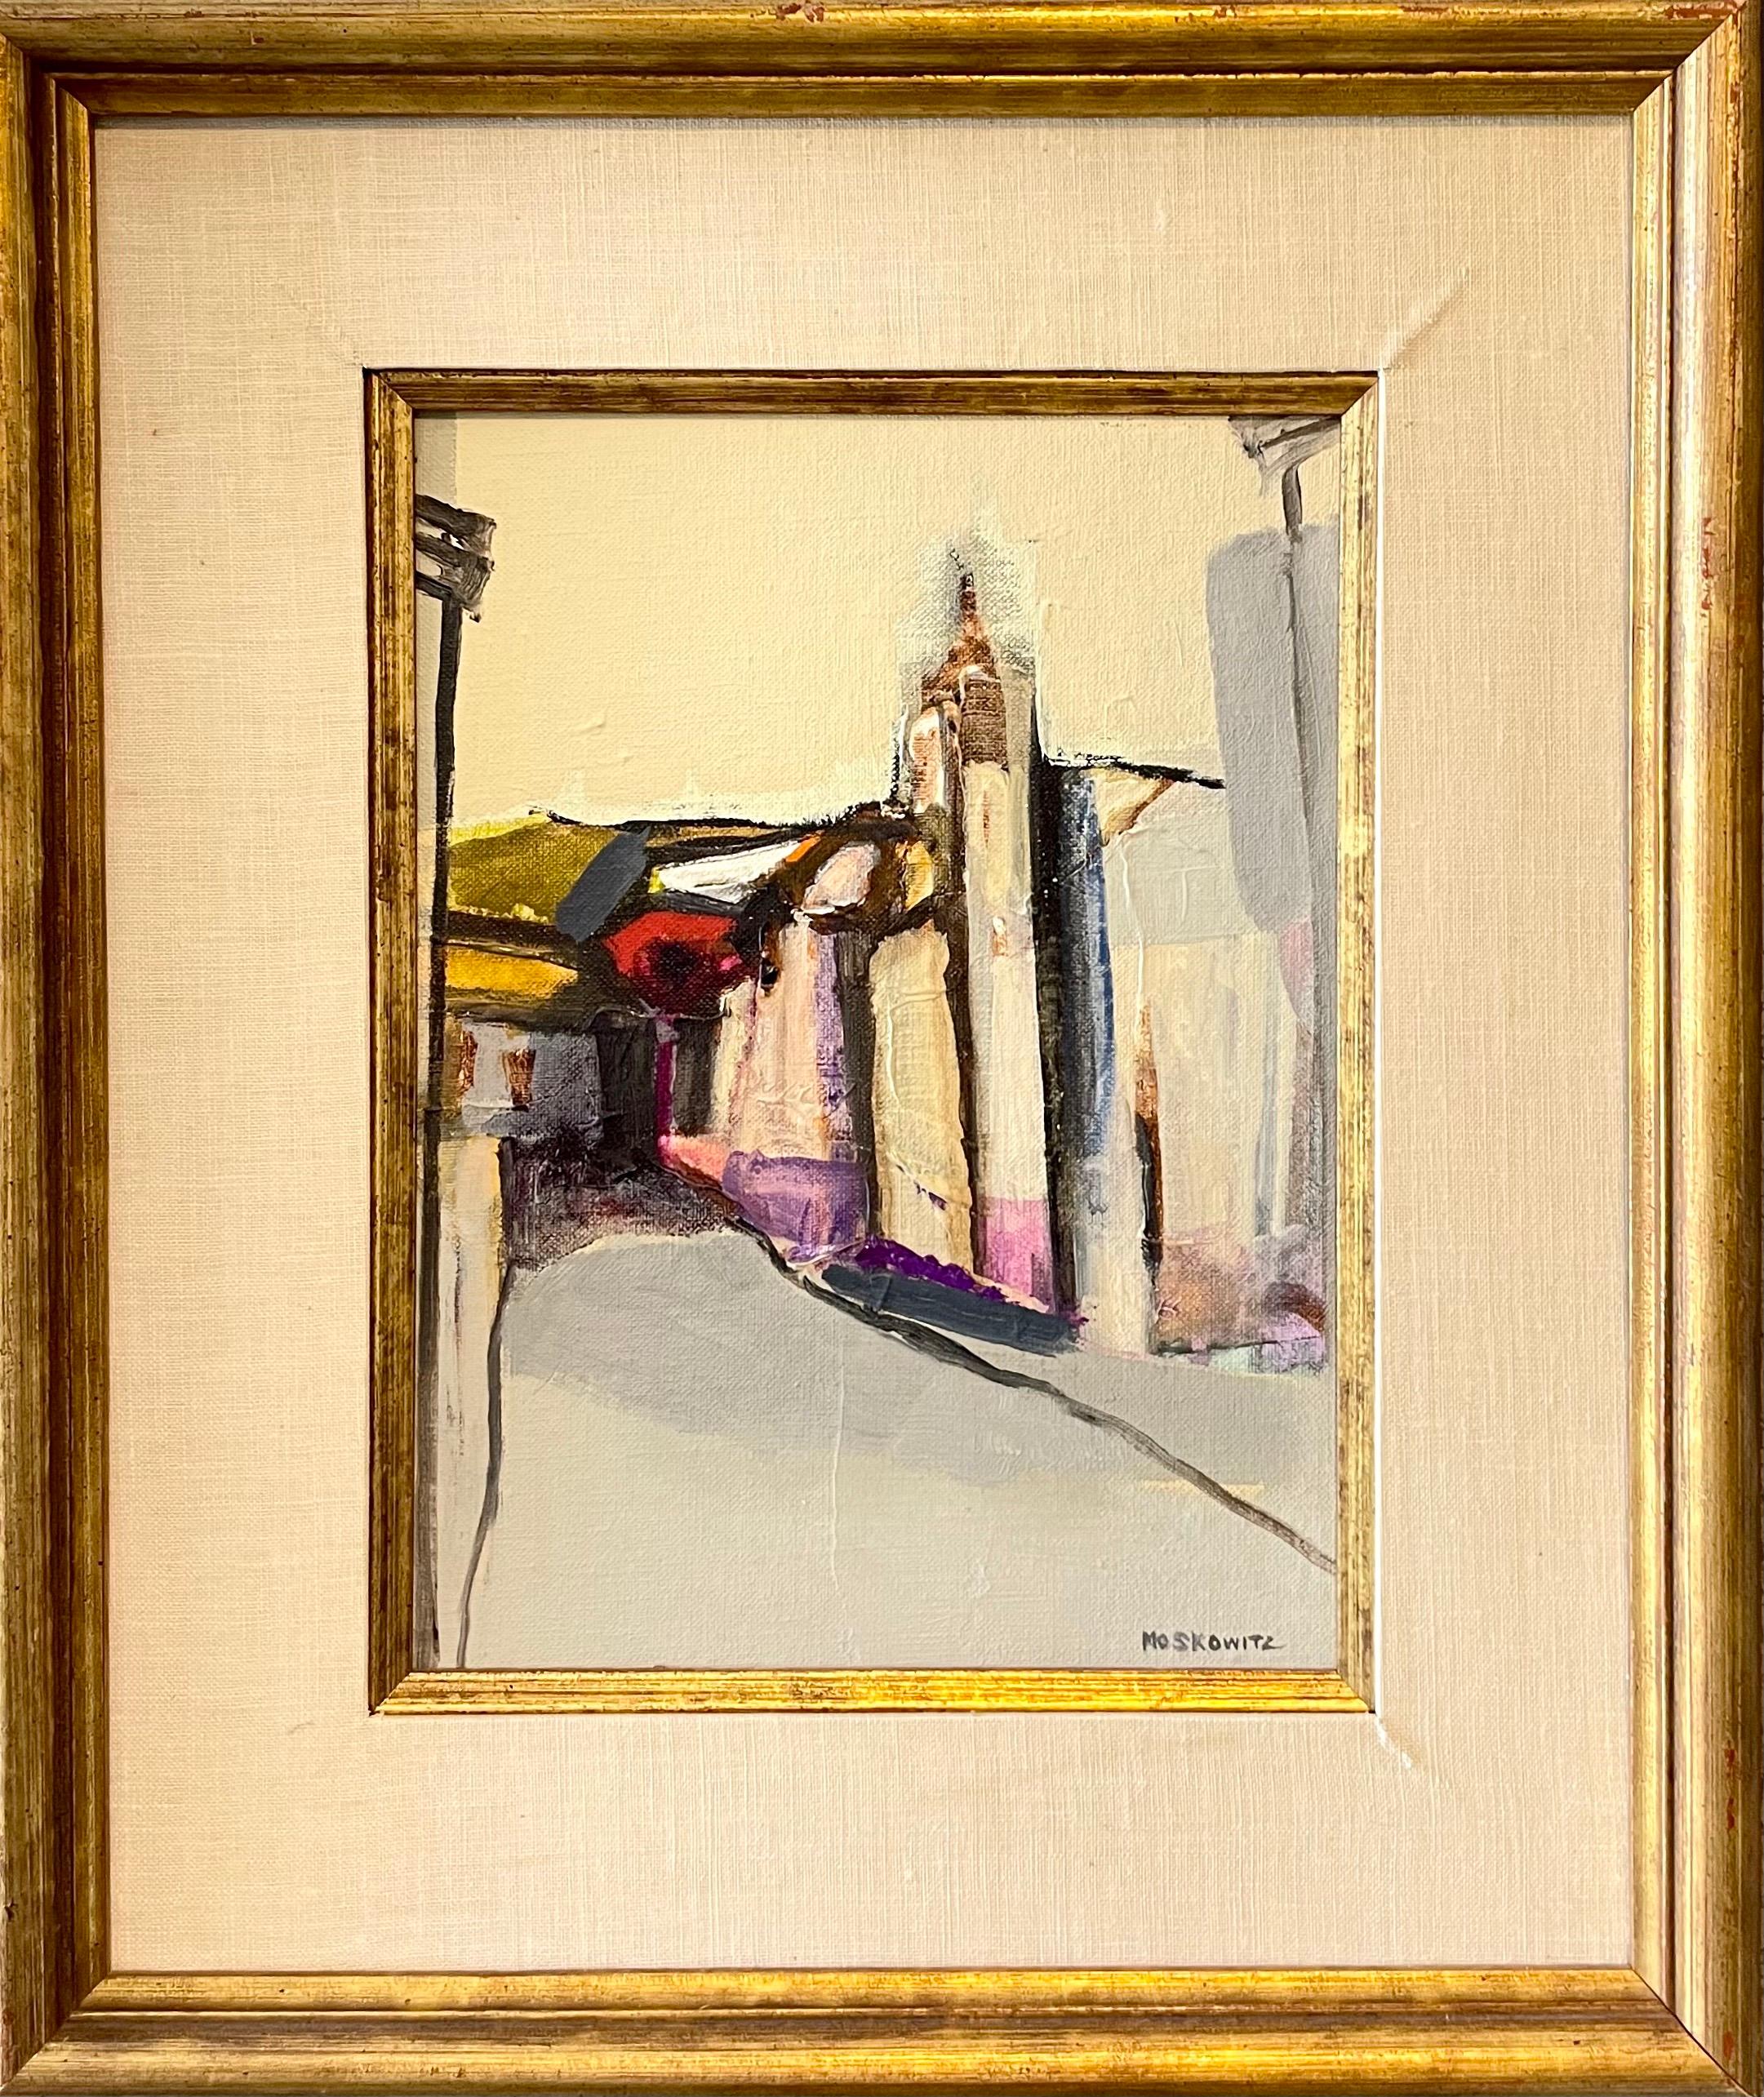 Robert Moskowitz, American (b.1935-)
Oil painting on Board
